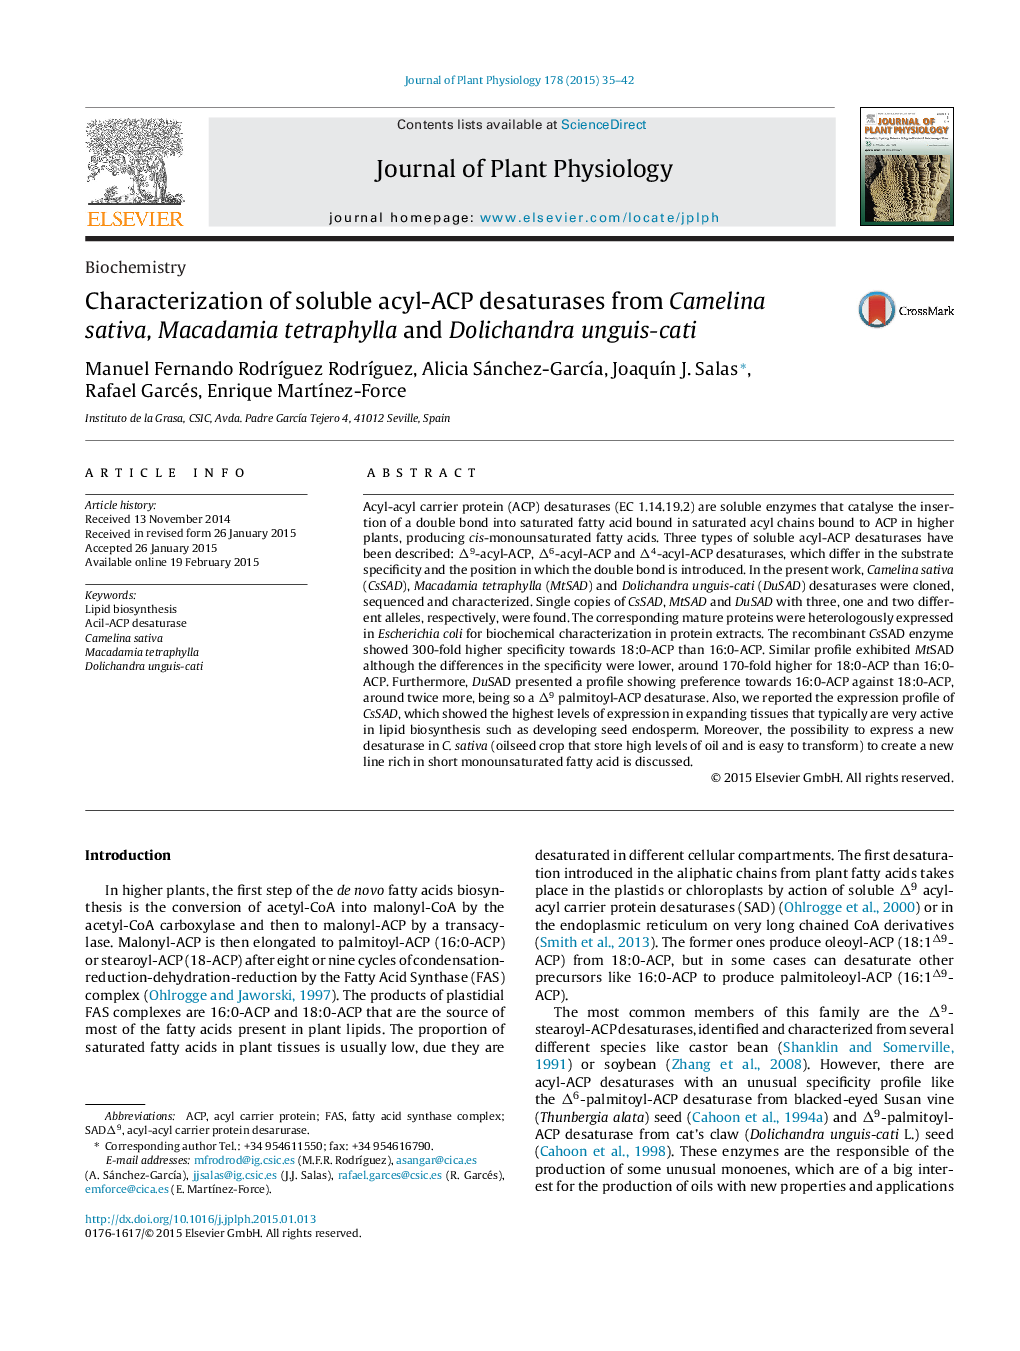 Characterization of soluble acyl-ACP desaturases from Camelina sativa, Macadamia tetraphylla and Dolichandra unguis-cati